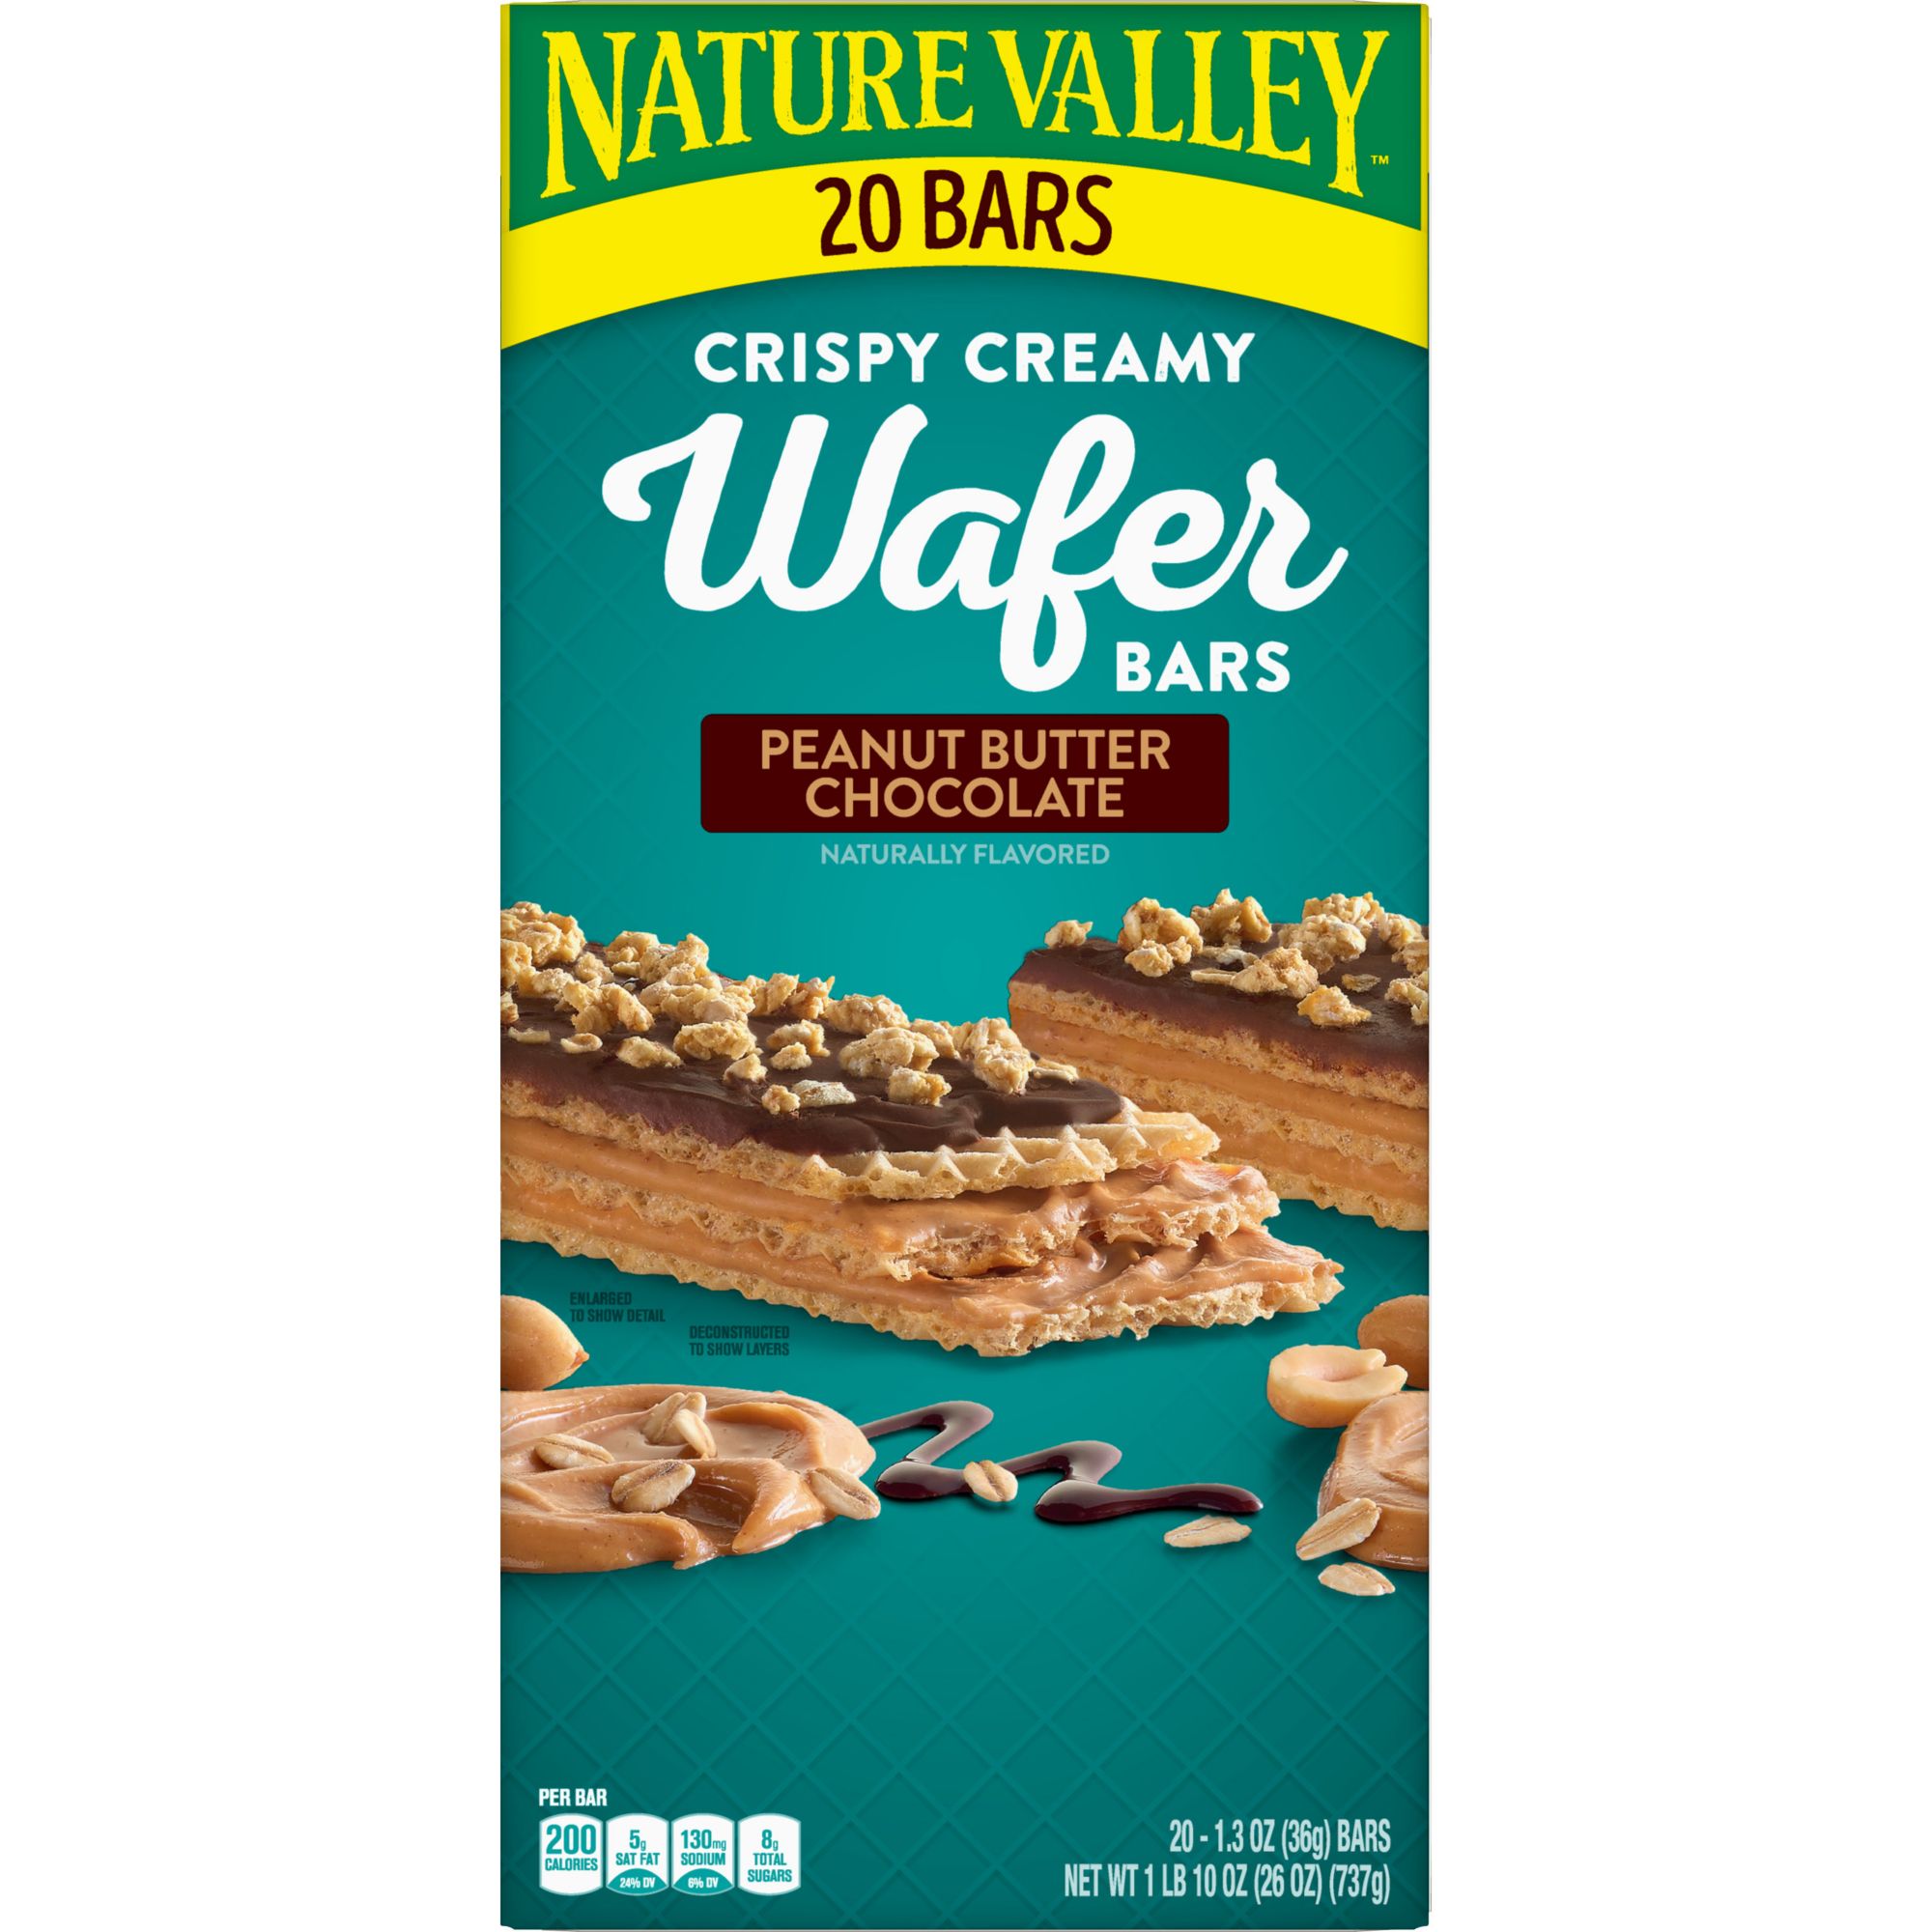 Nature Valley™ Oats & Dark Chocolate Crunchy Granola Bars, 1 ct - Harris  Teeter